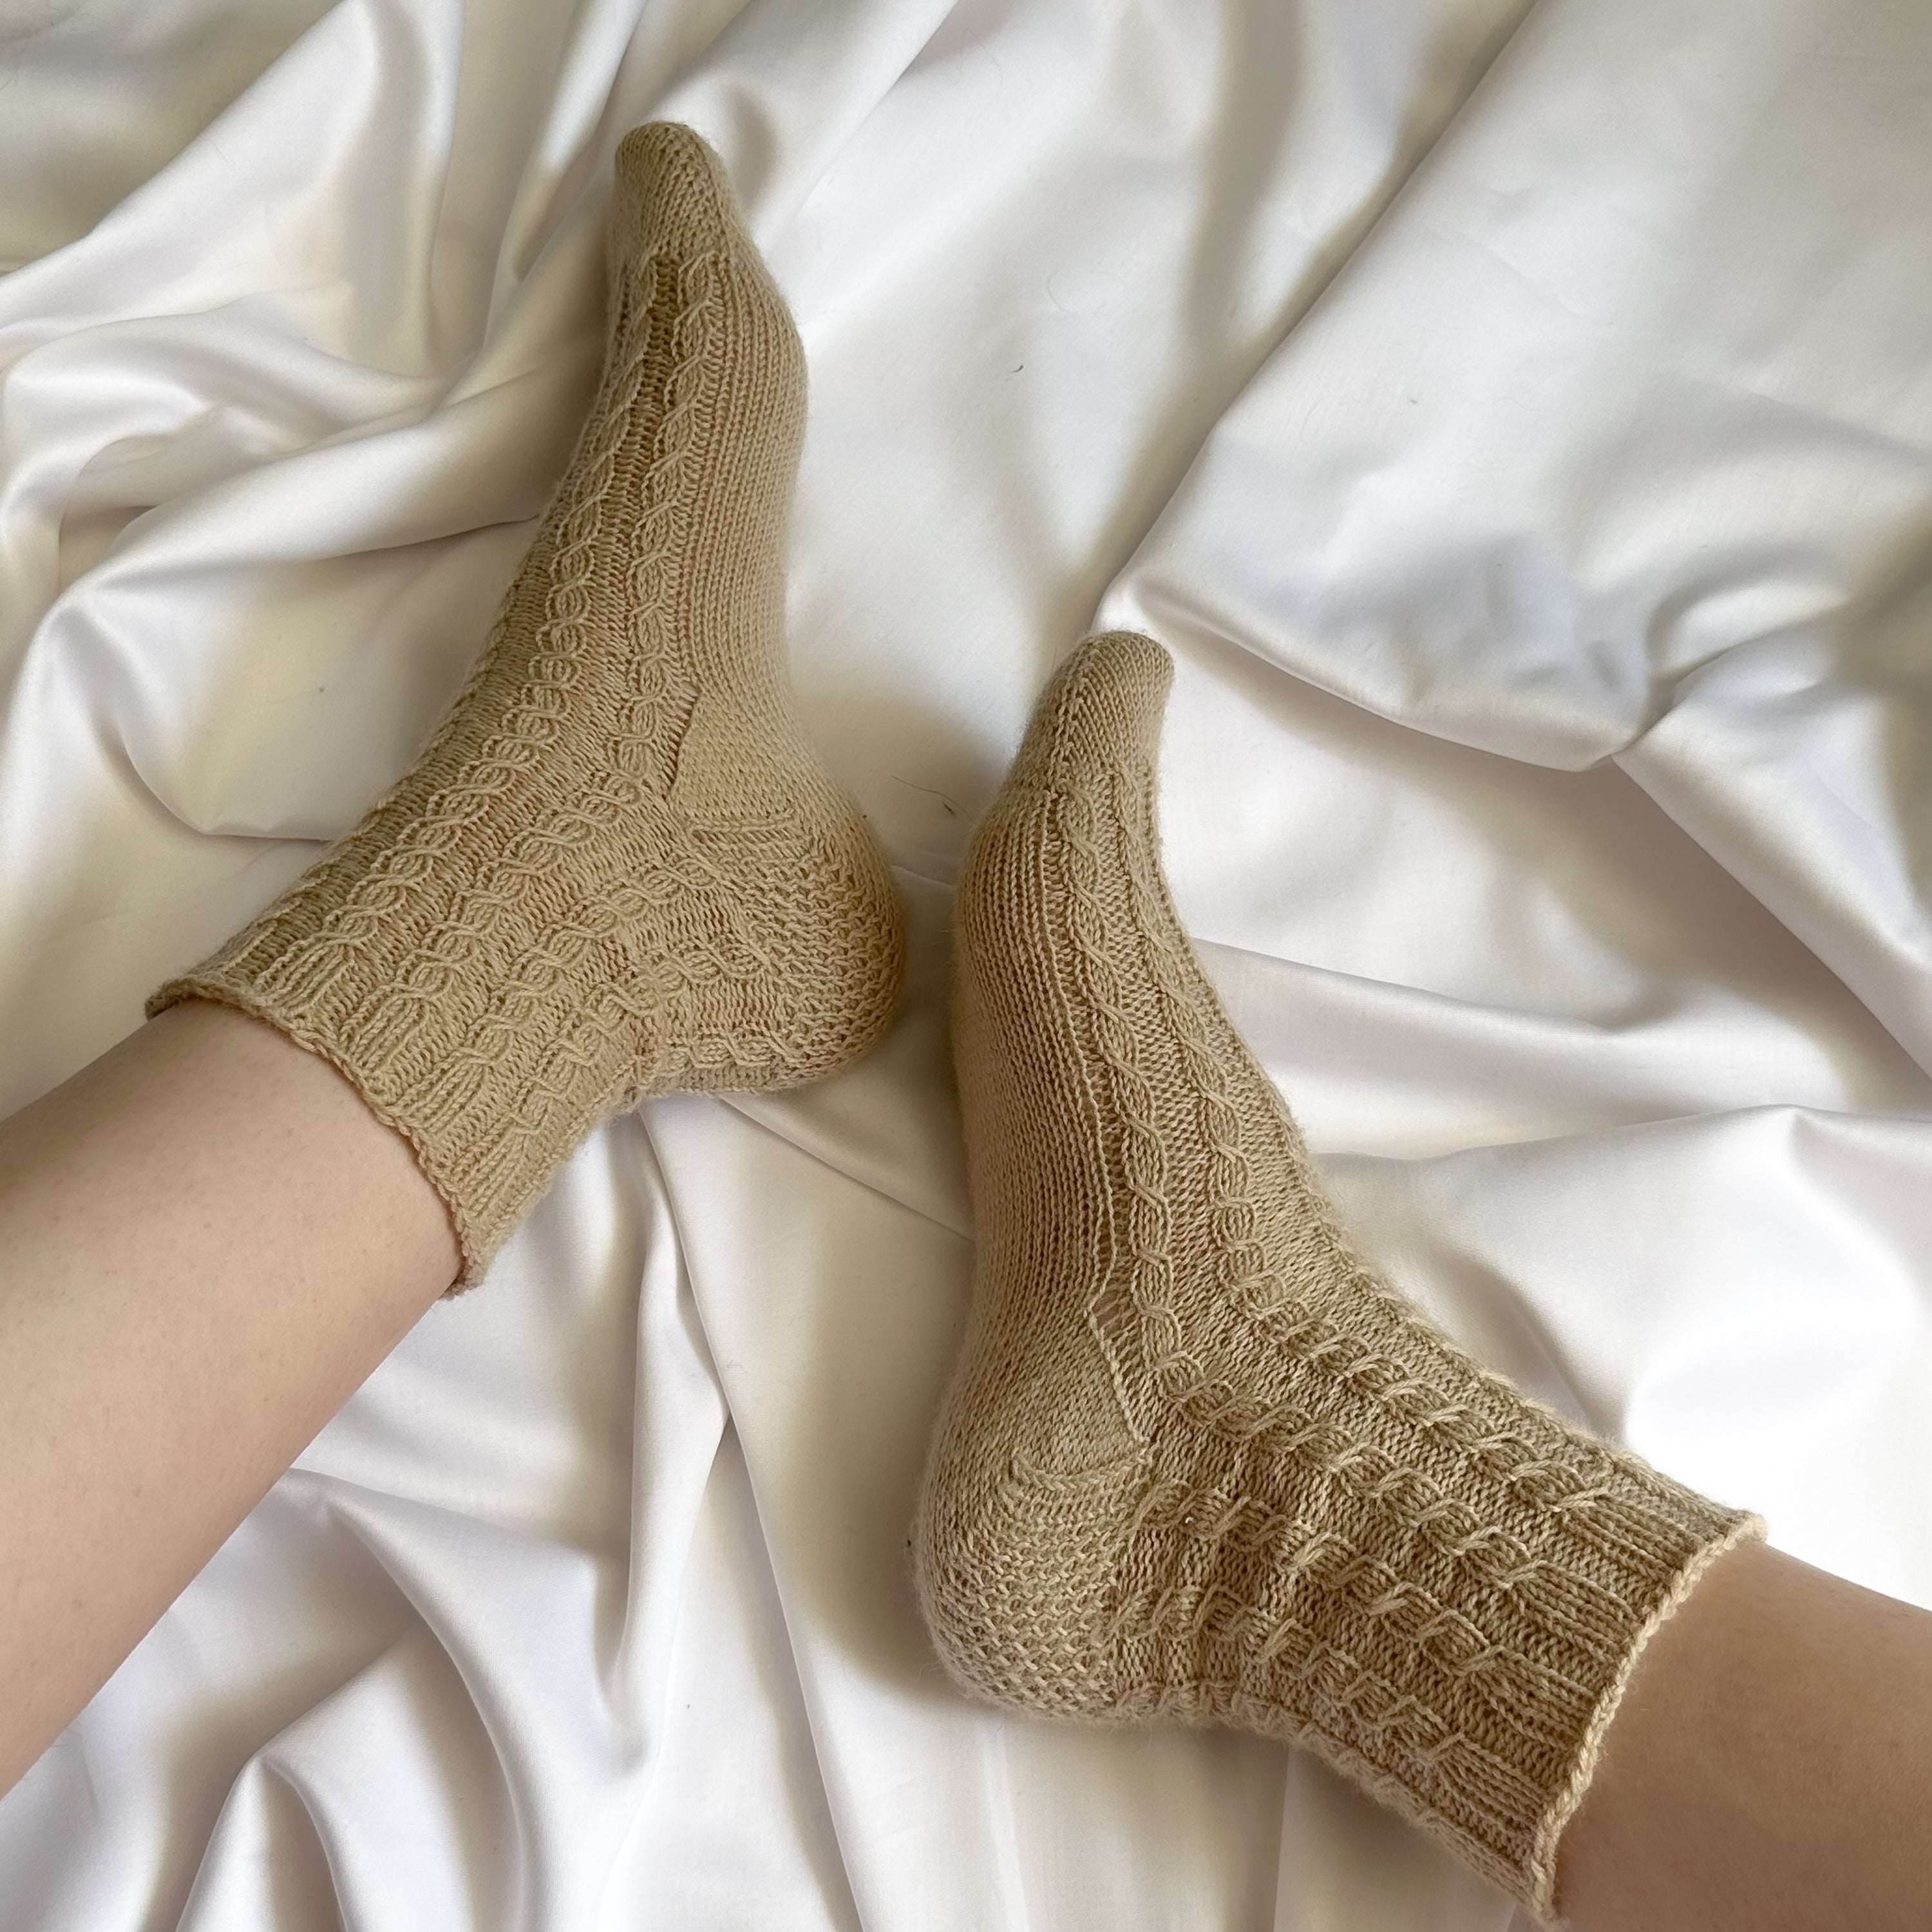 Curonian Socks